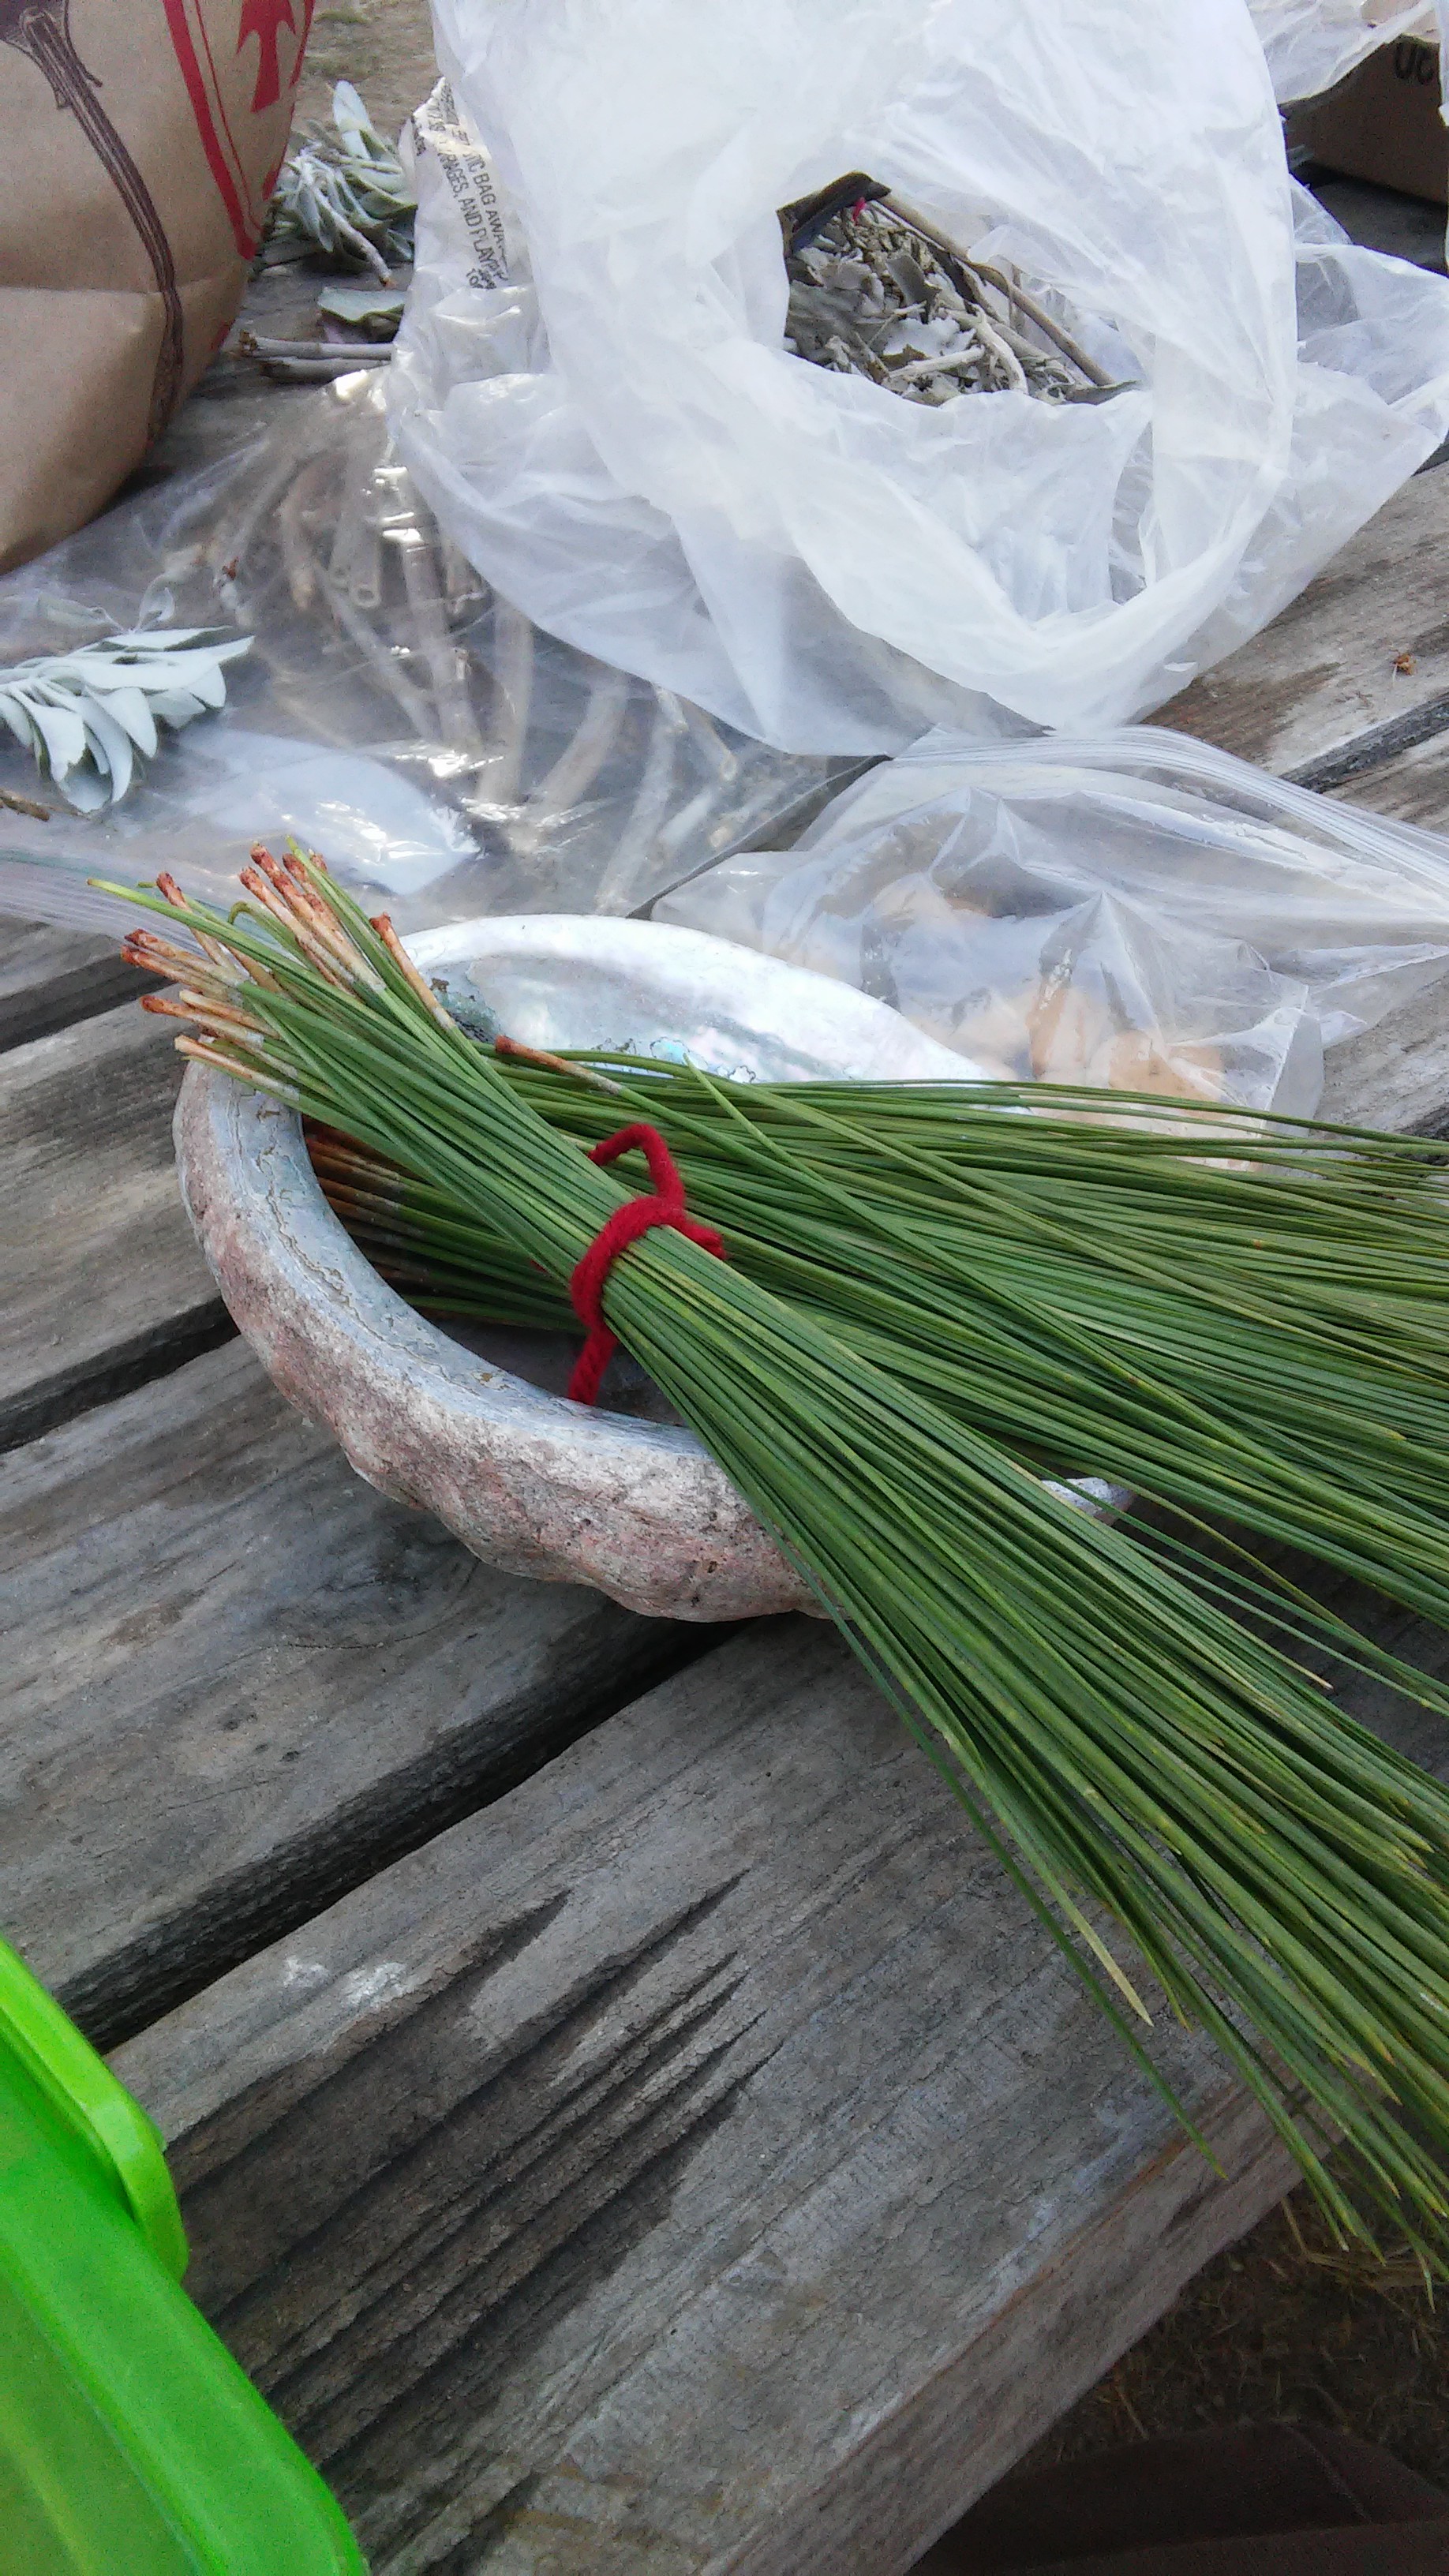 Pine needles (Pinus ponderosa), also gathered at the UCSC Arboretum, are bundled for basket-making.